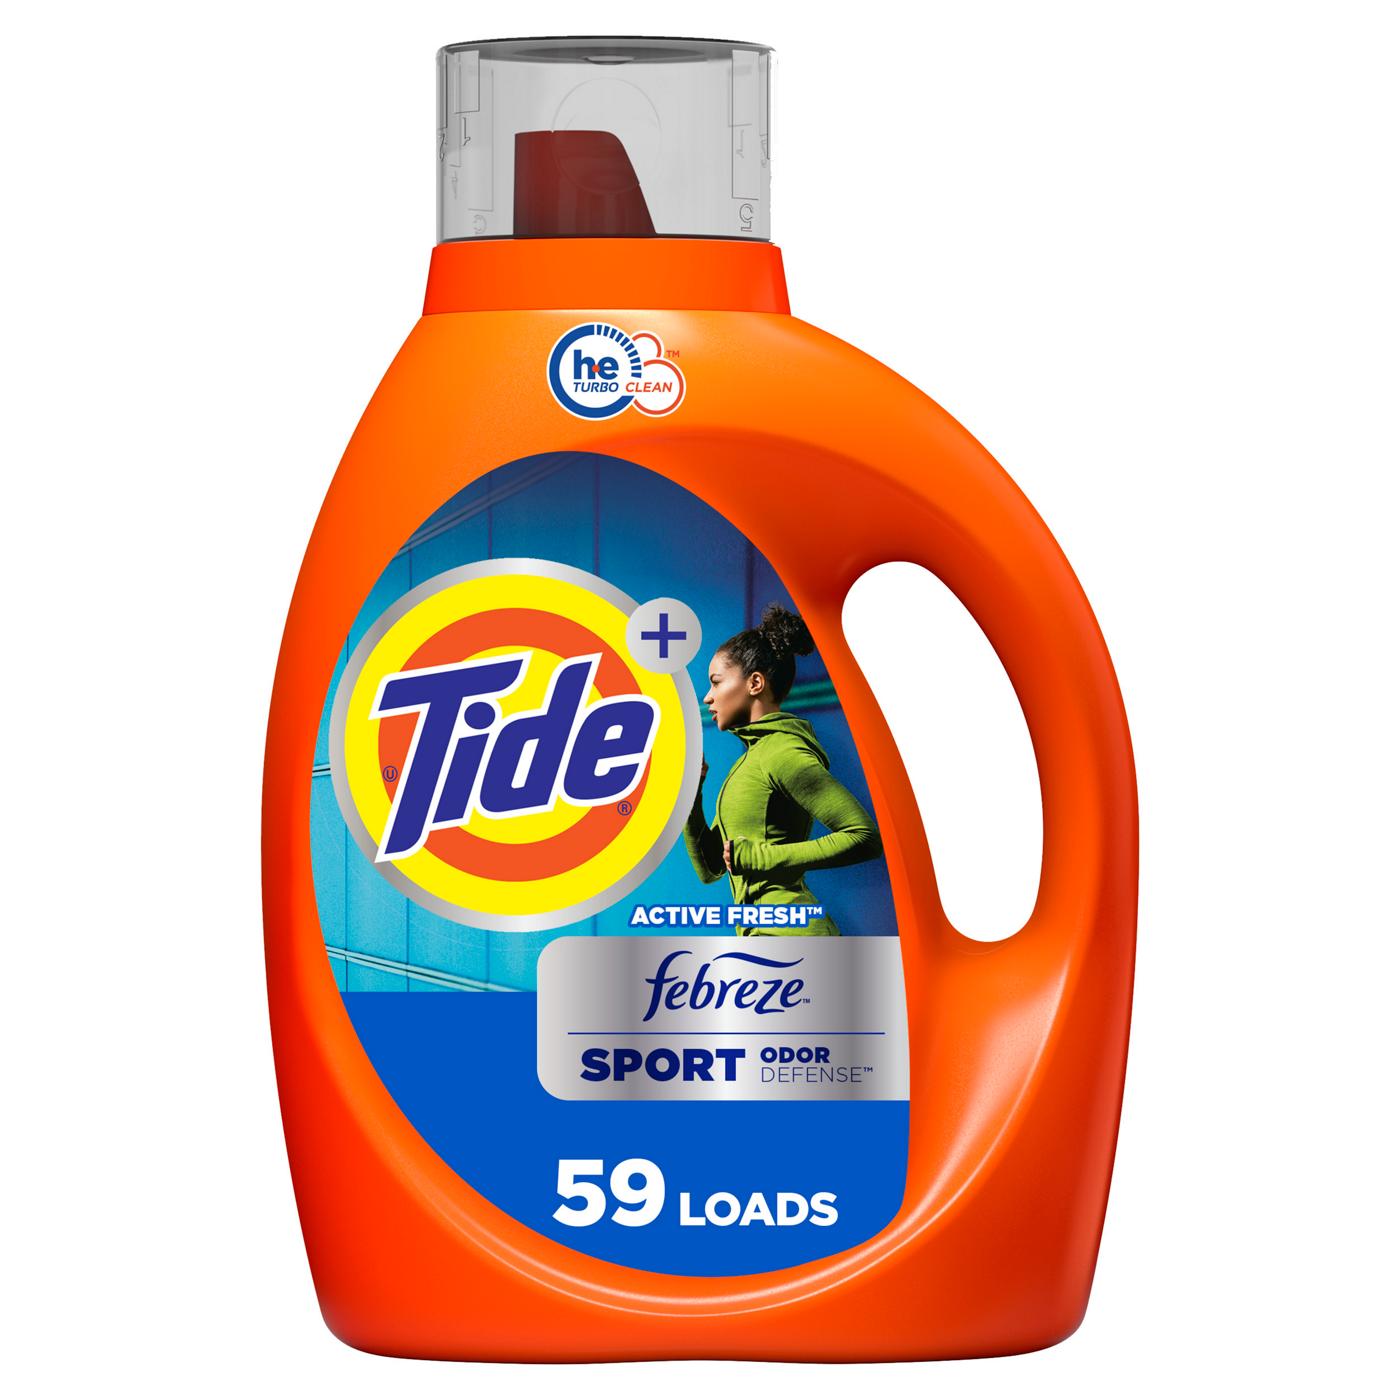 Tide + Febreze Sport Odor Defense HE Turbo Clean Liquid Laundry Detergent, 59 Loads -  Active Fresh; image 1 of 15